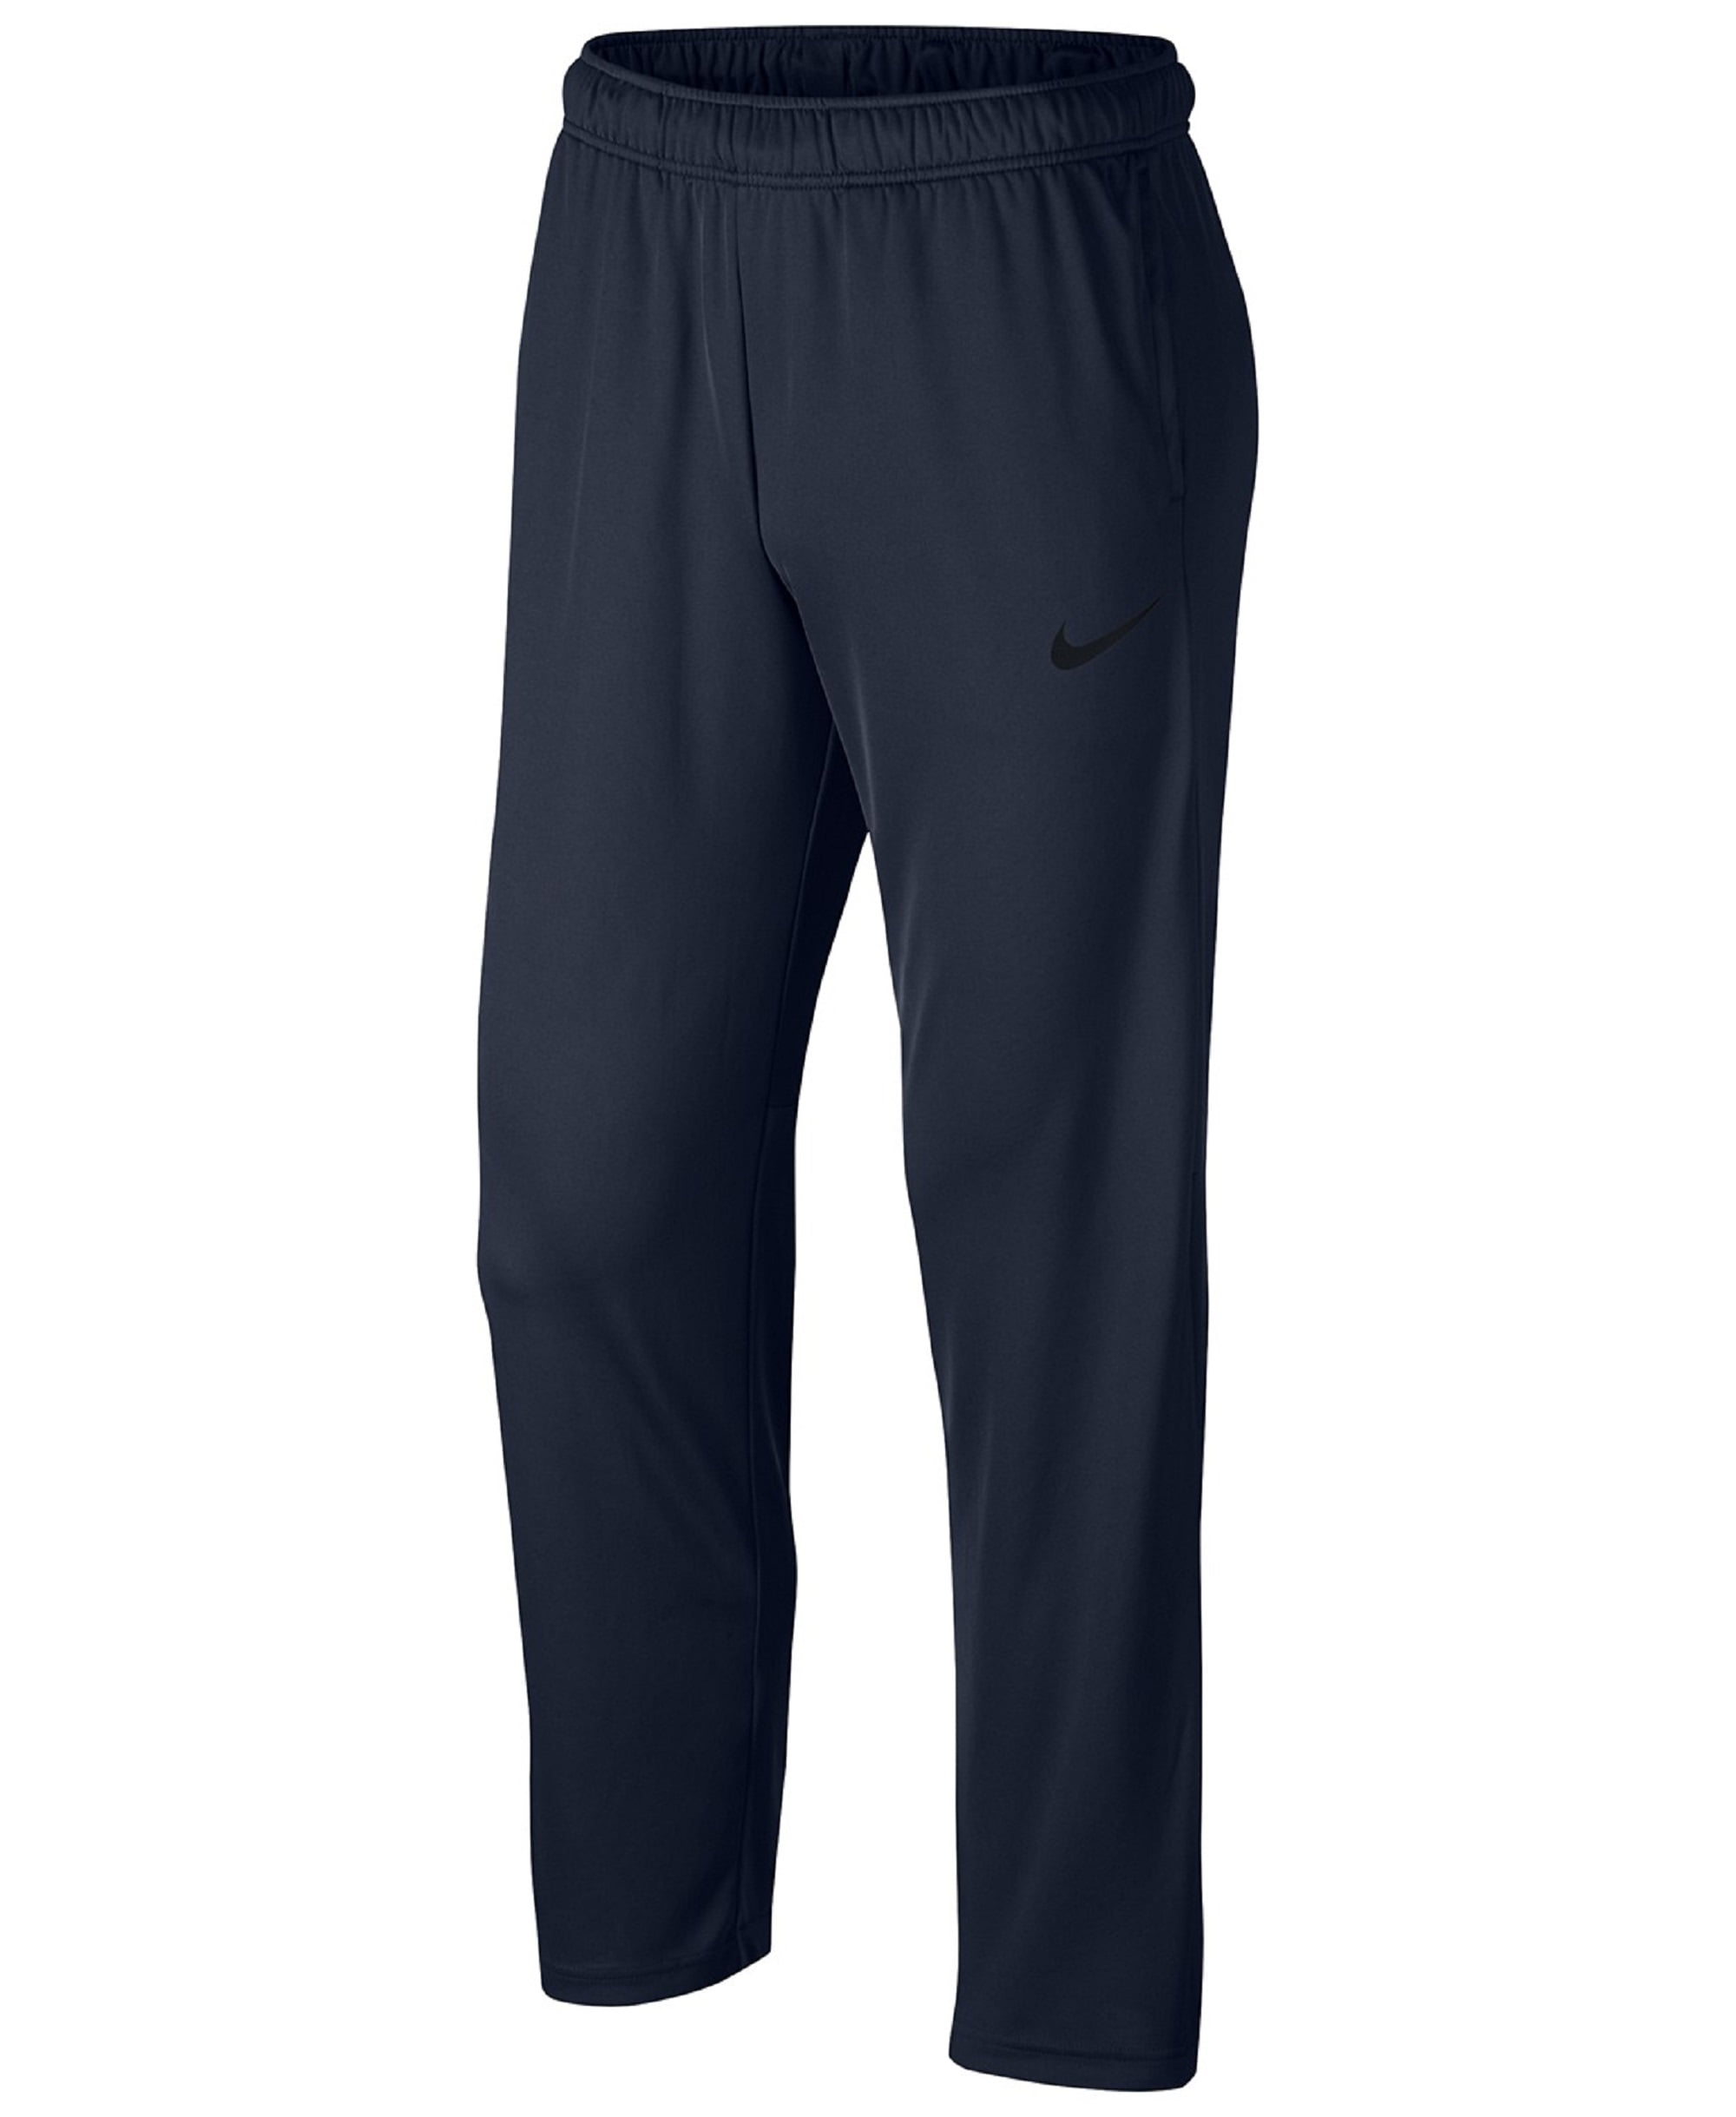 Nike - Nike Men's Epic Dri-FIT Knit Training Pants, Navy, S - Walmart ...